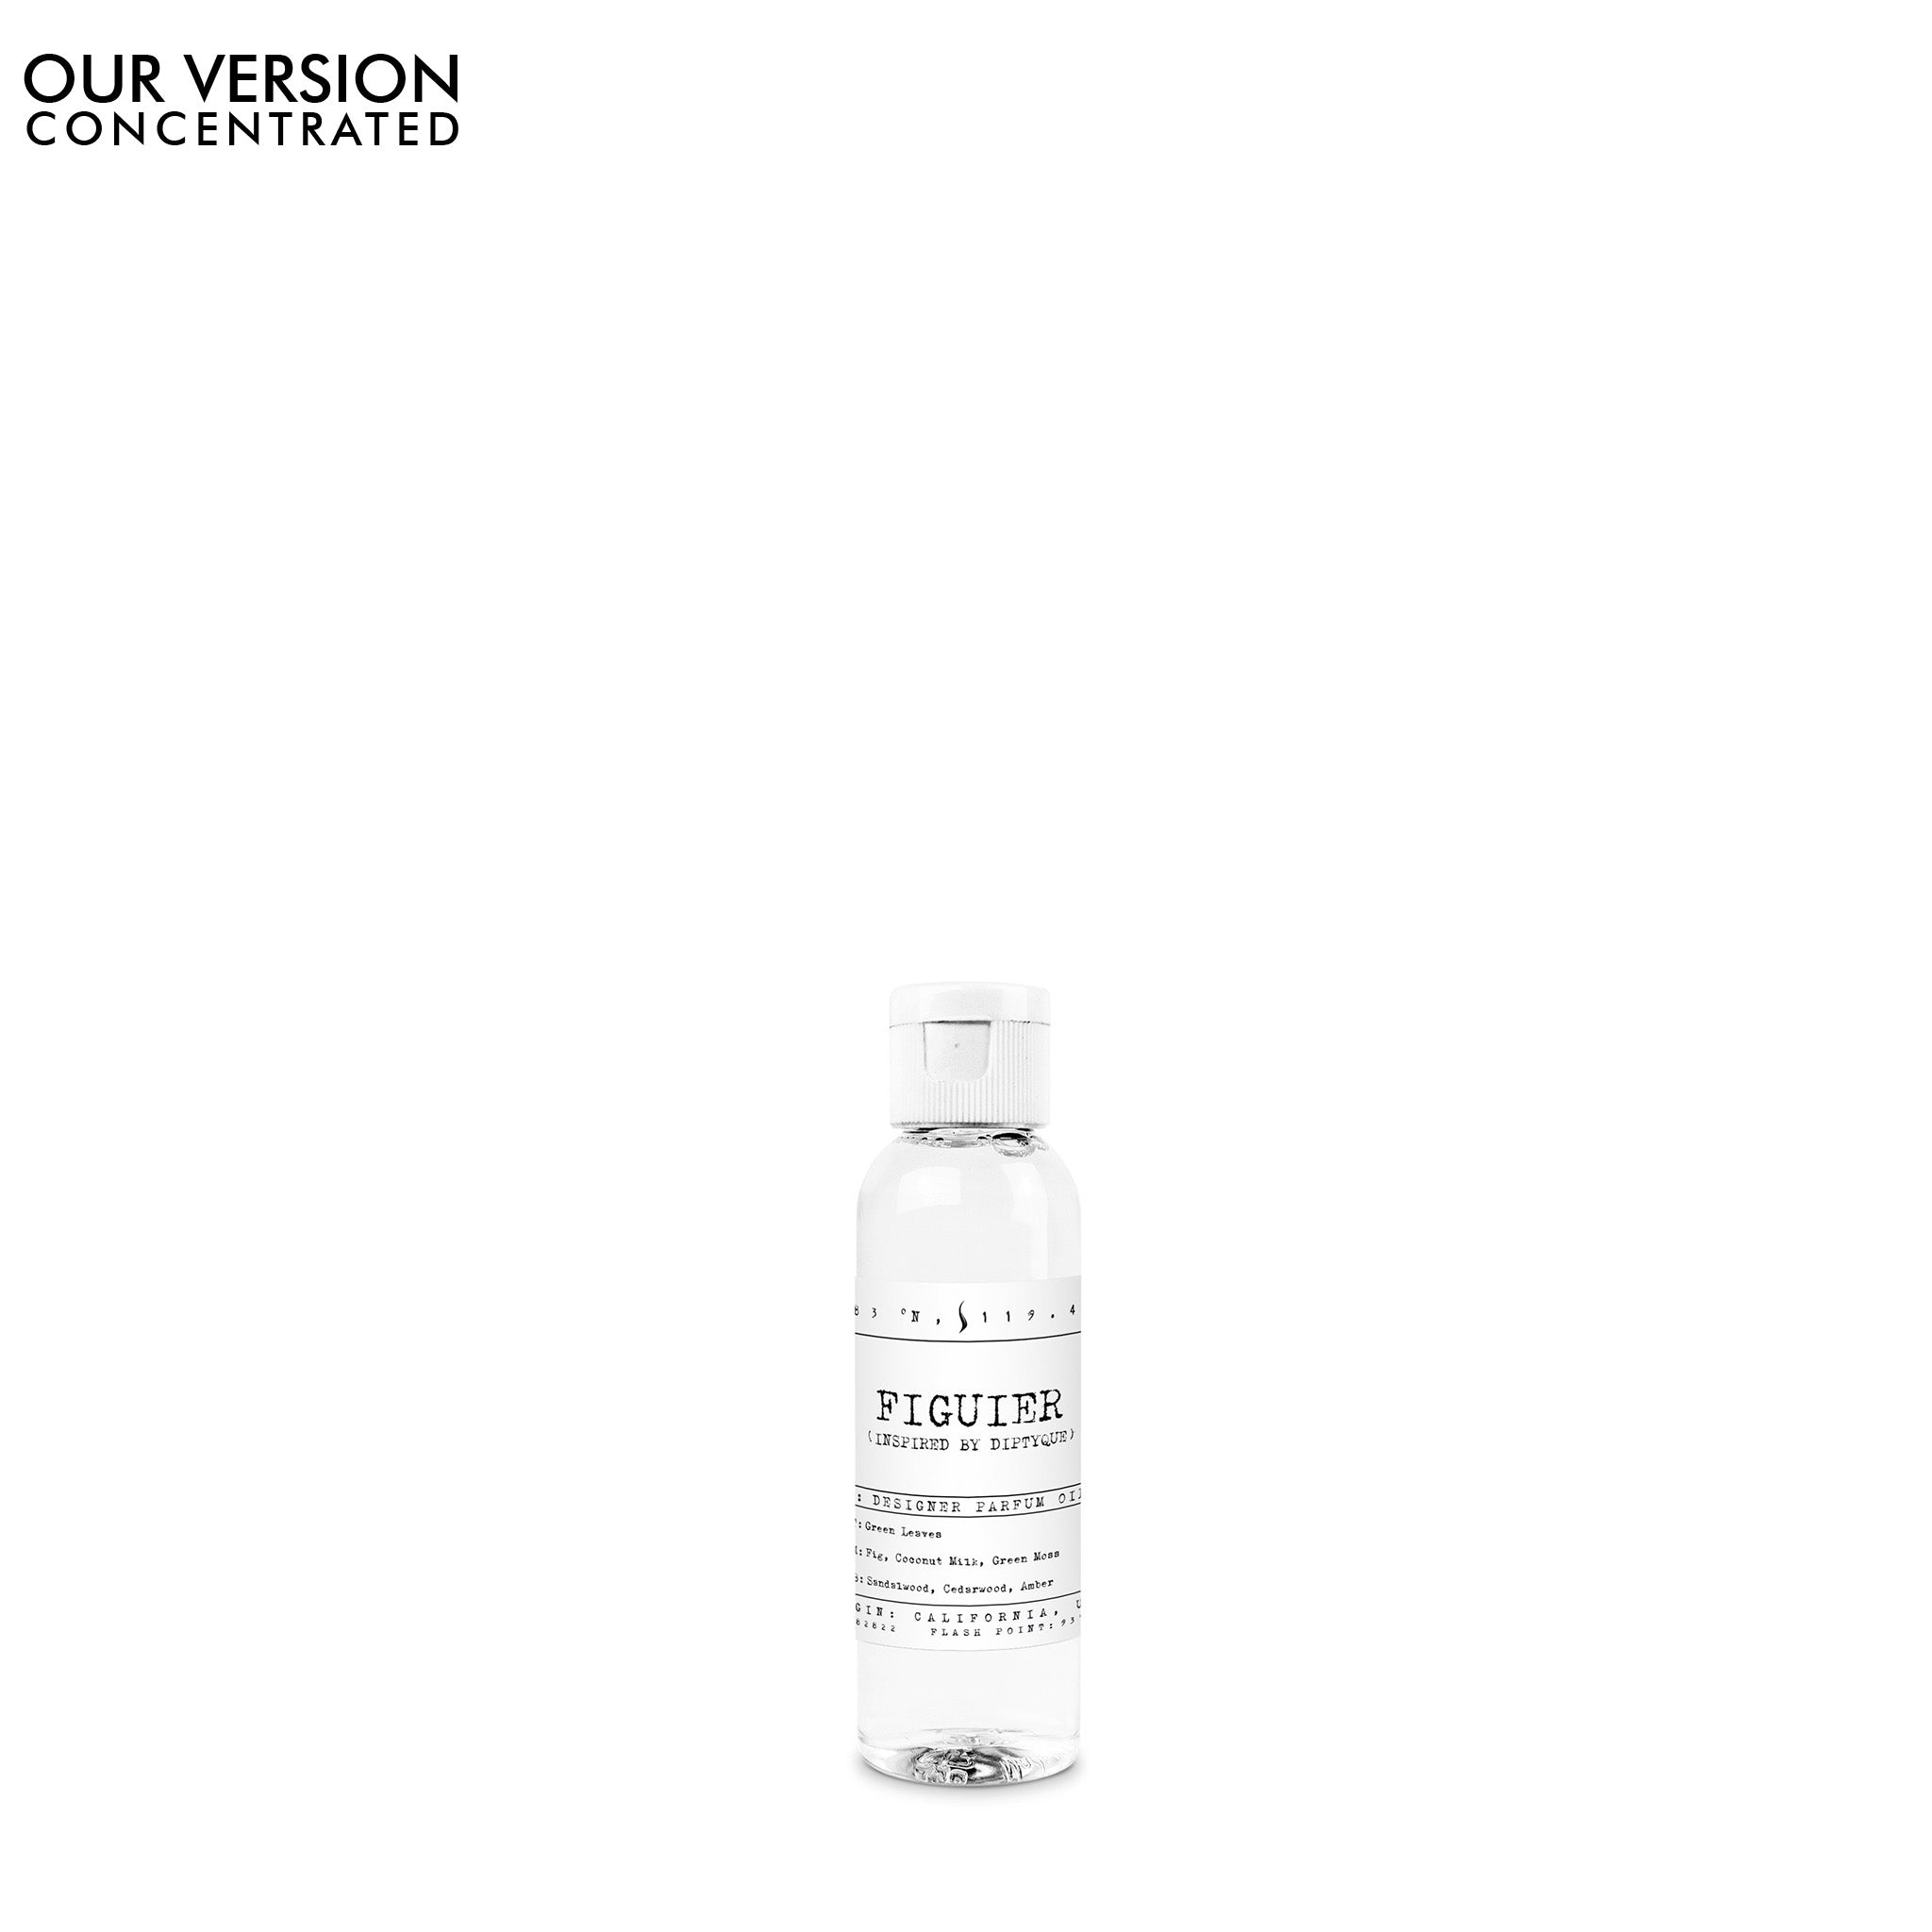 Figuier (our version) Fragrance Oil